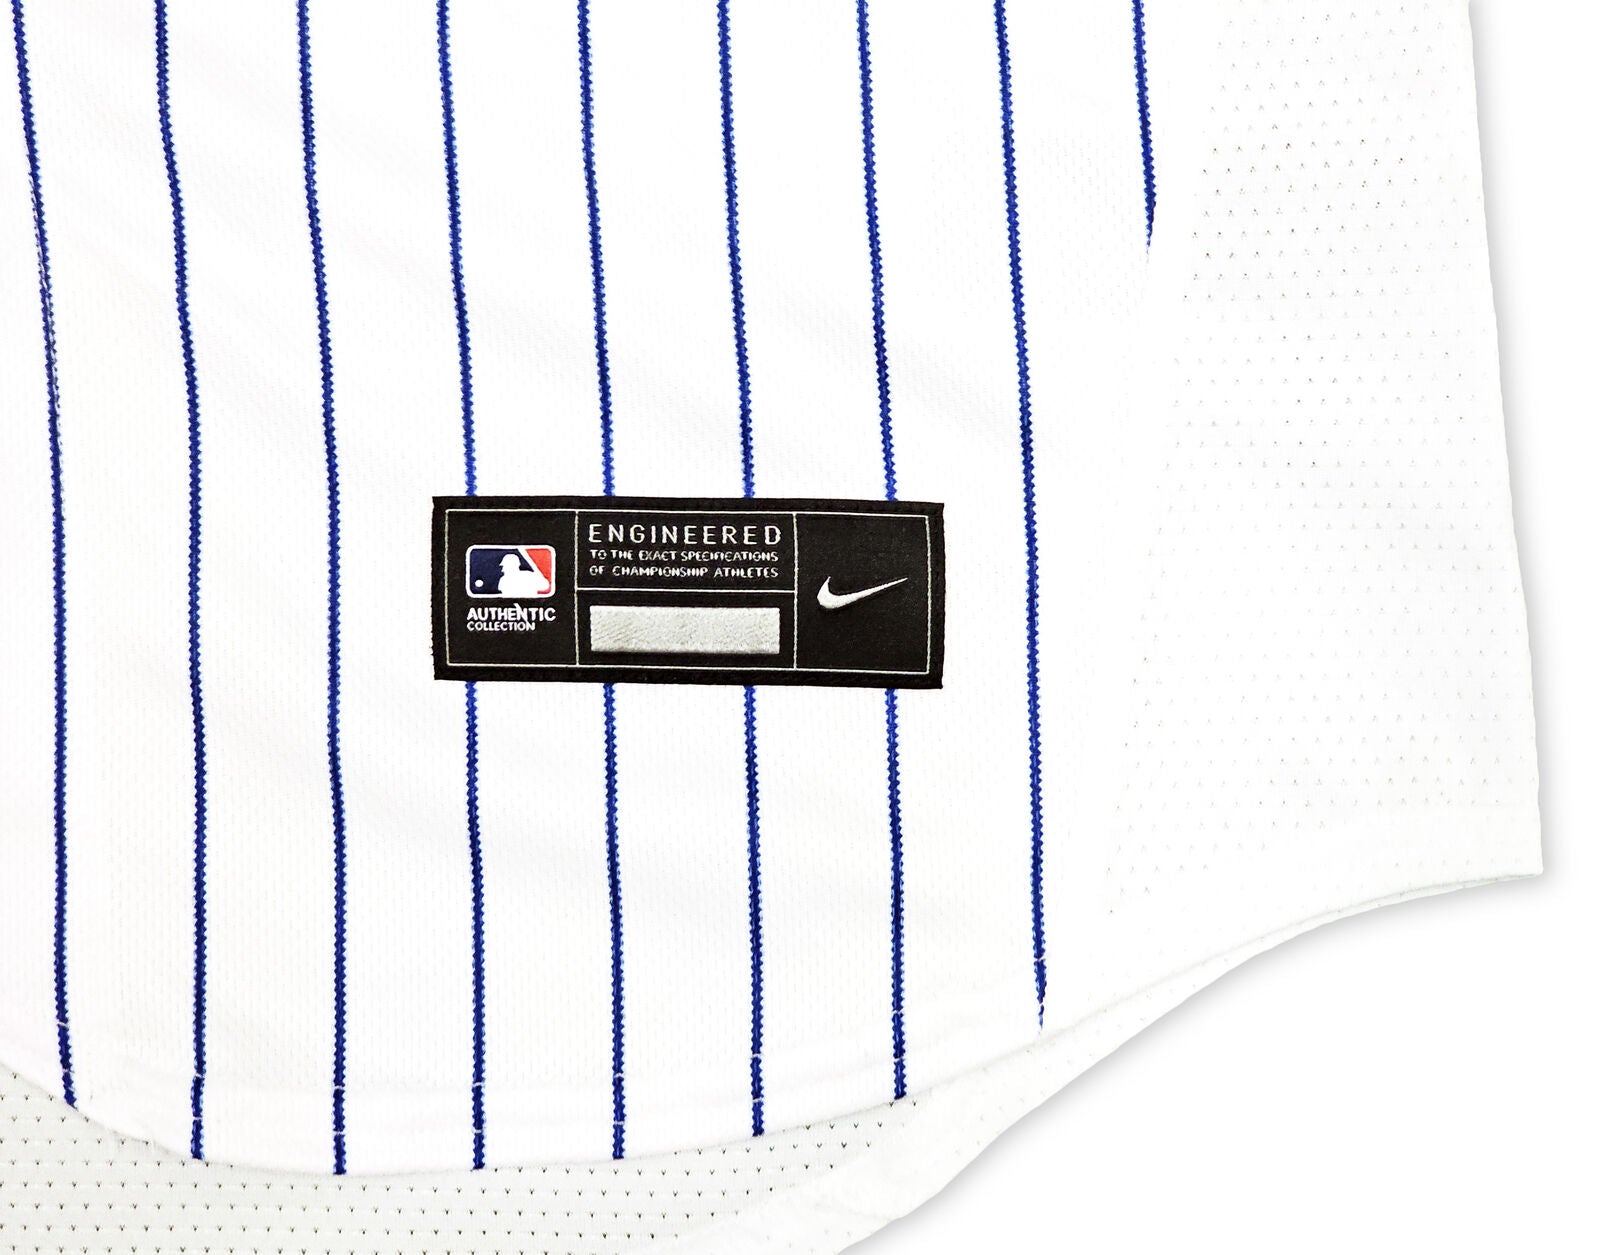 Jacob deGrom Autographed New York Mets Nike Baseball Jersey - Fanatics